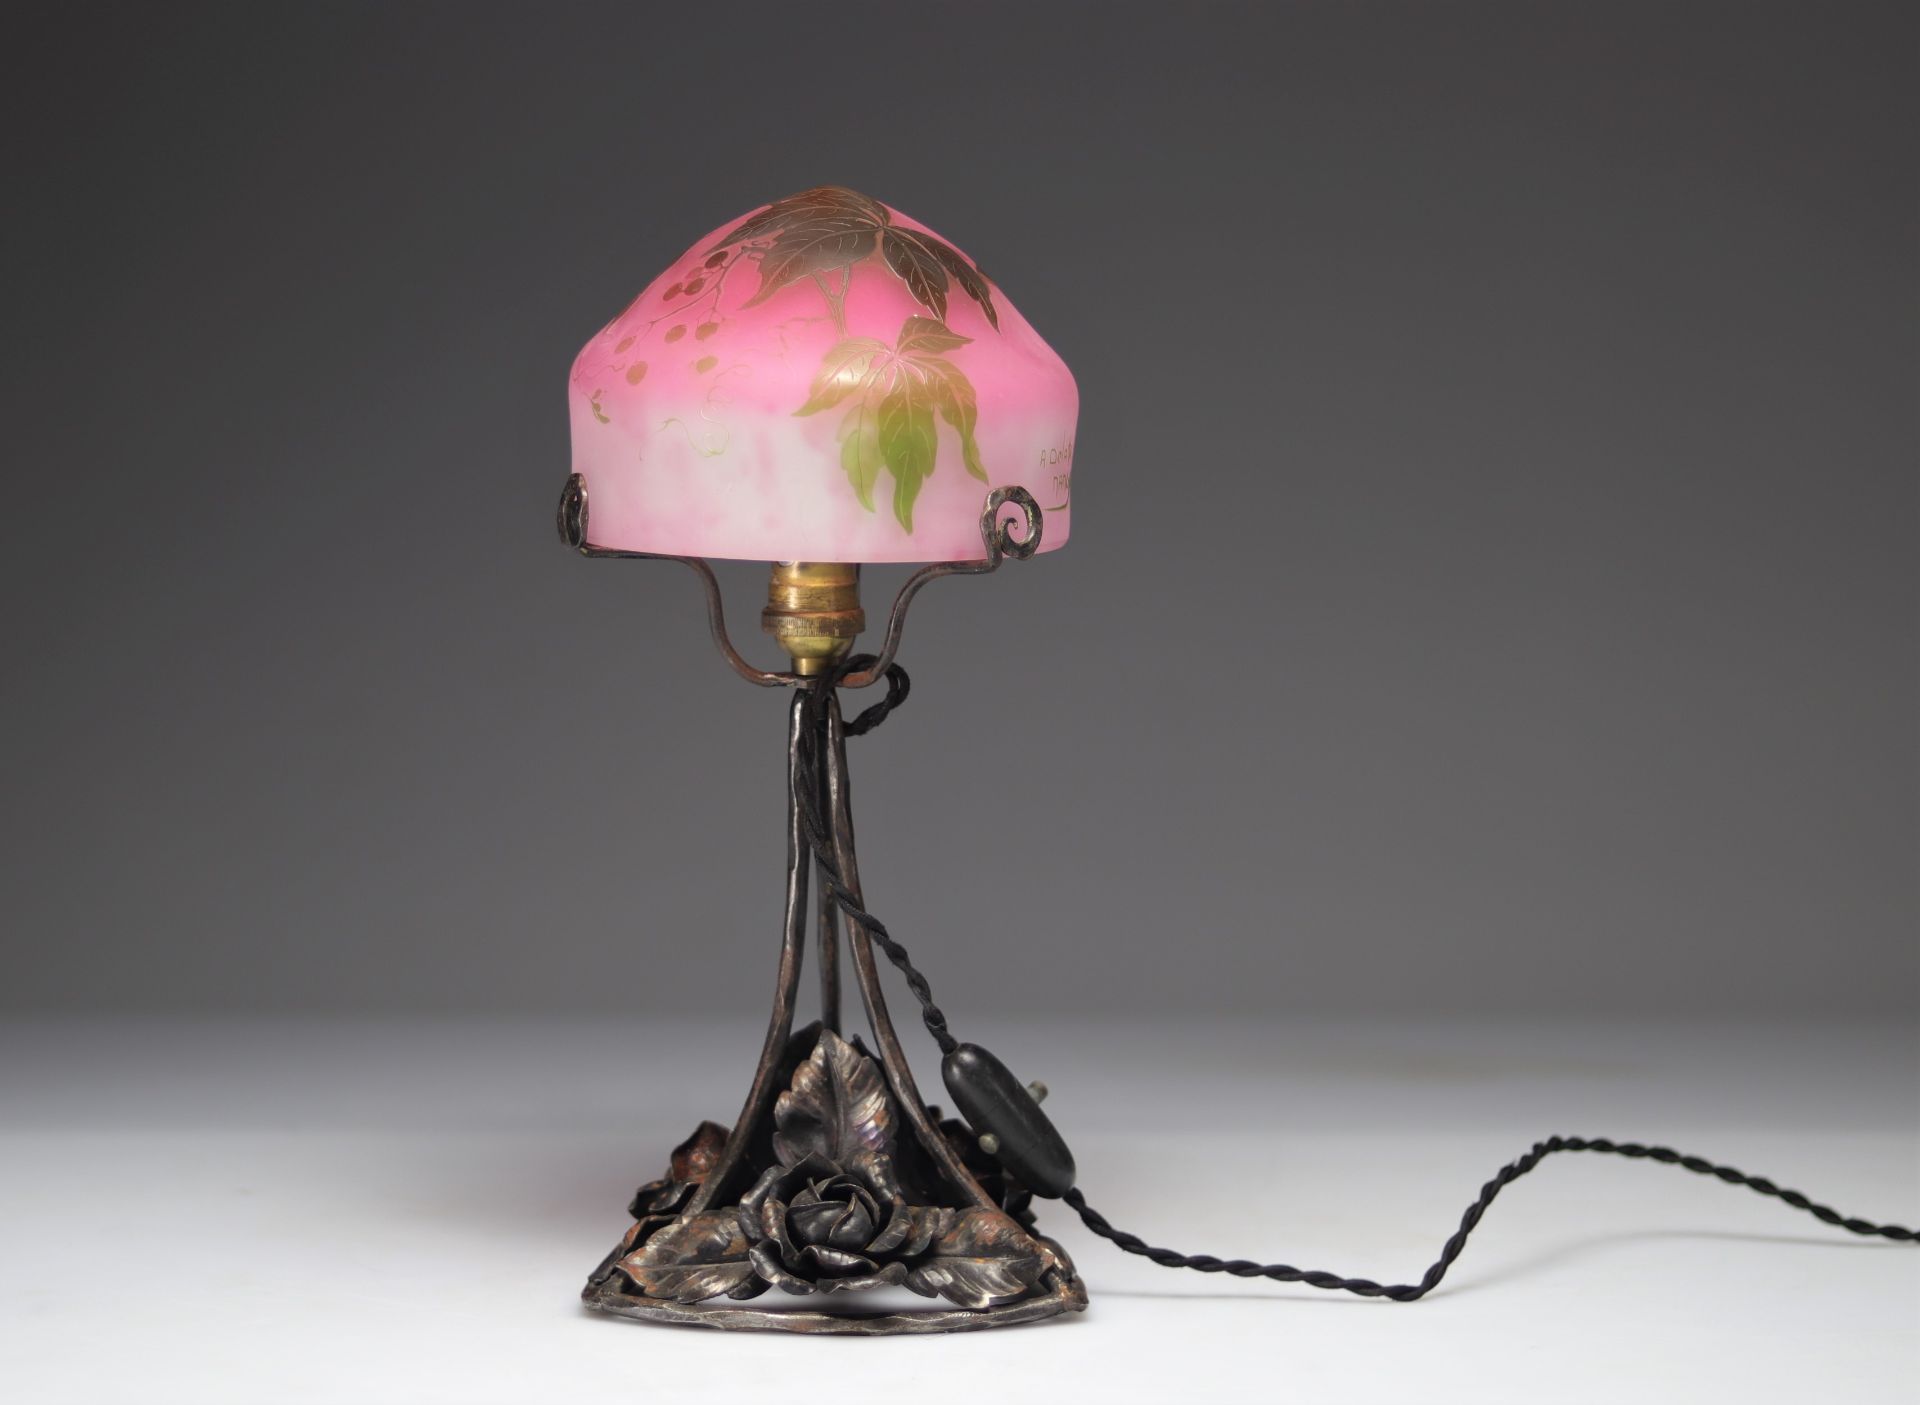 Delattre Nancy mushroom lamp with floral decoration - Image 4 of 5